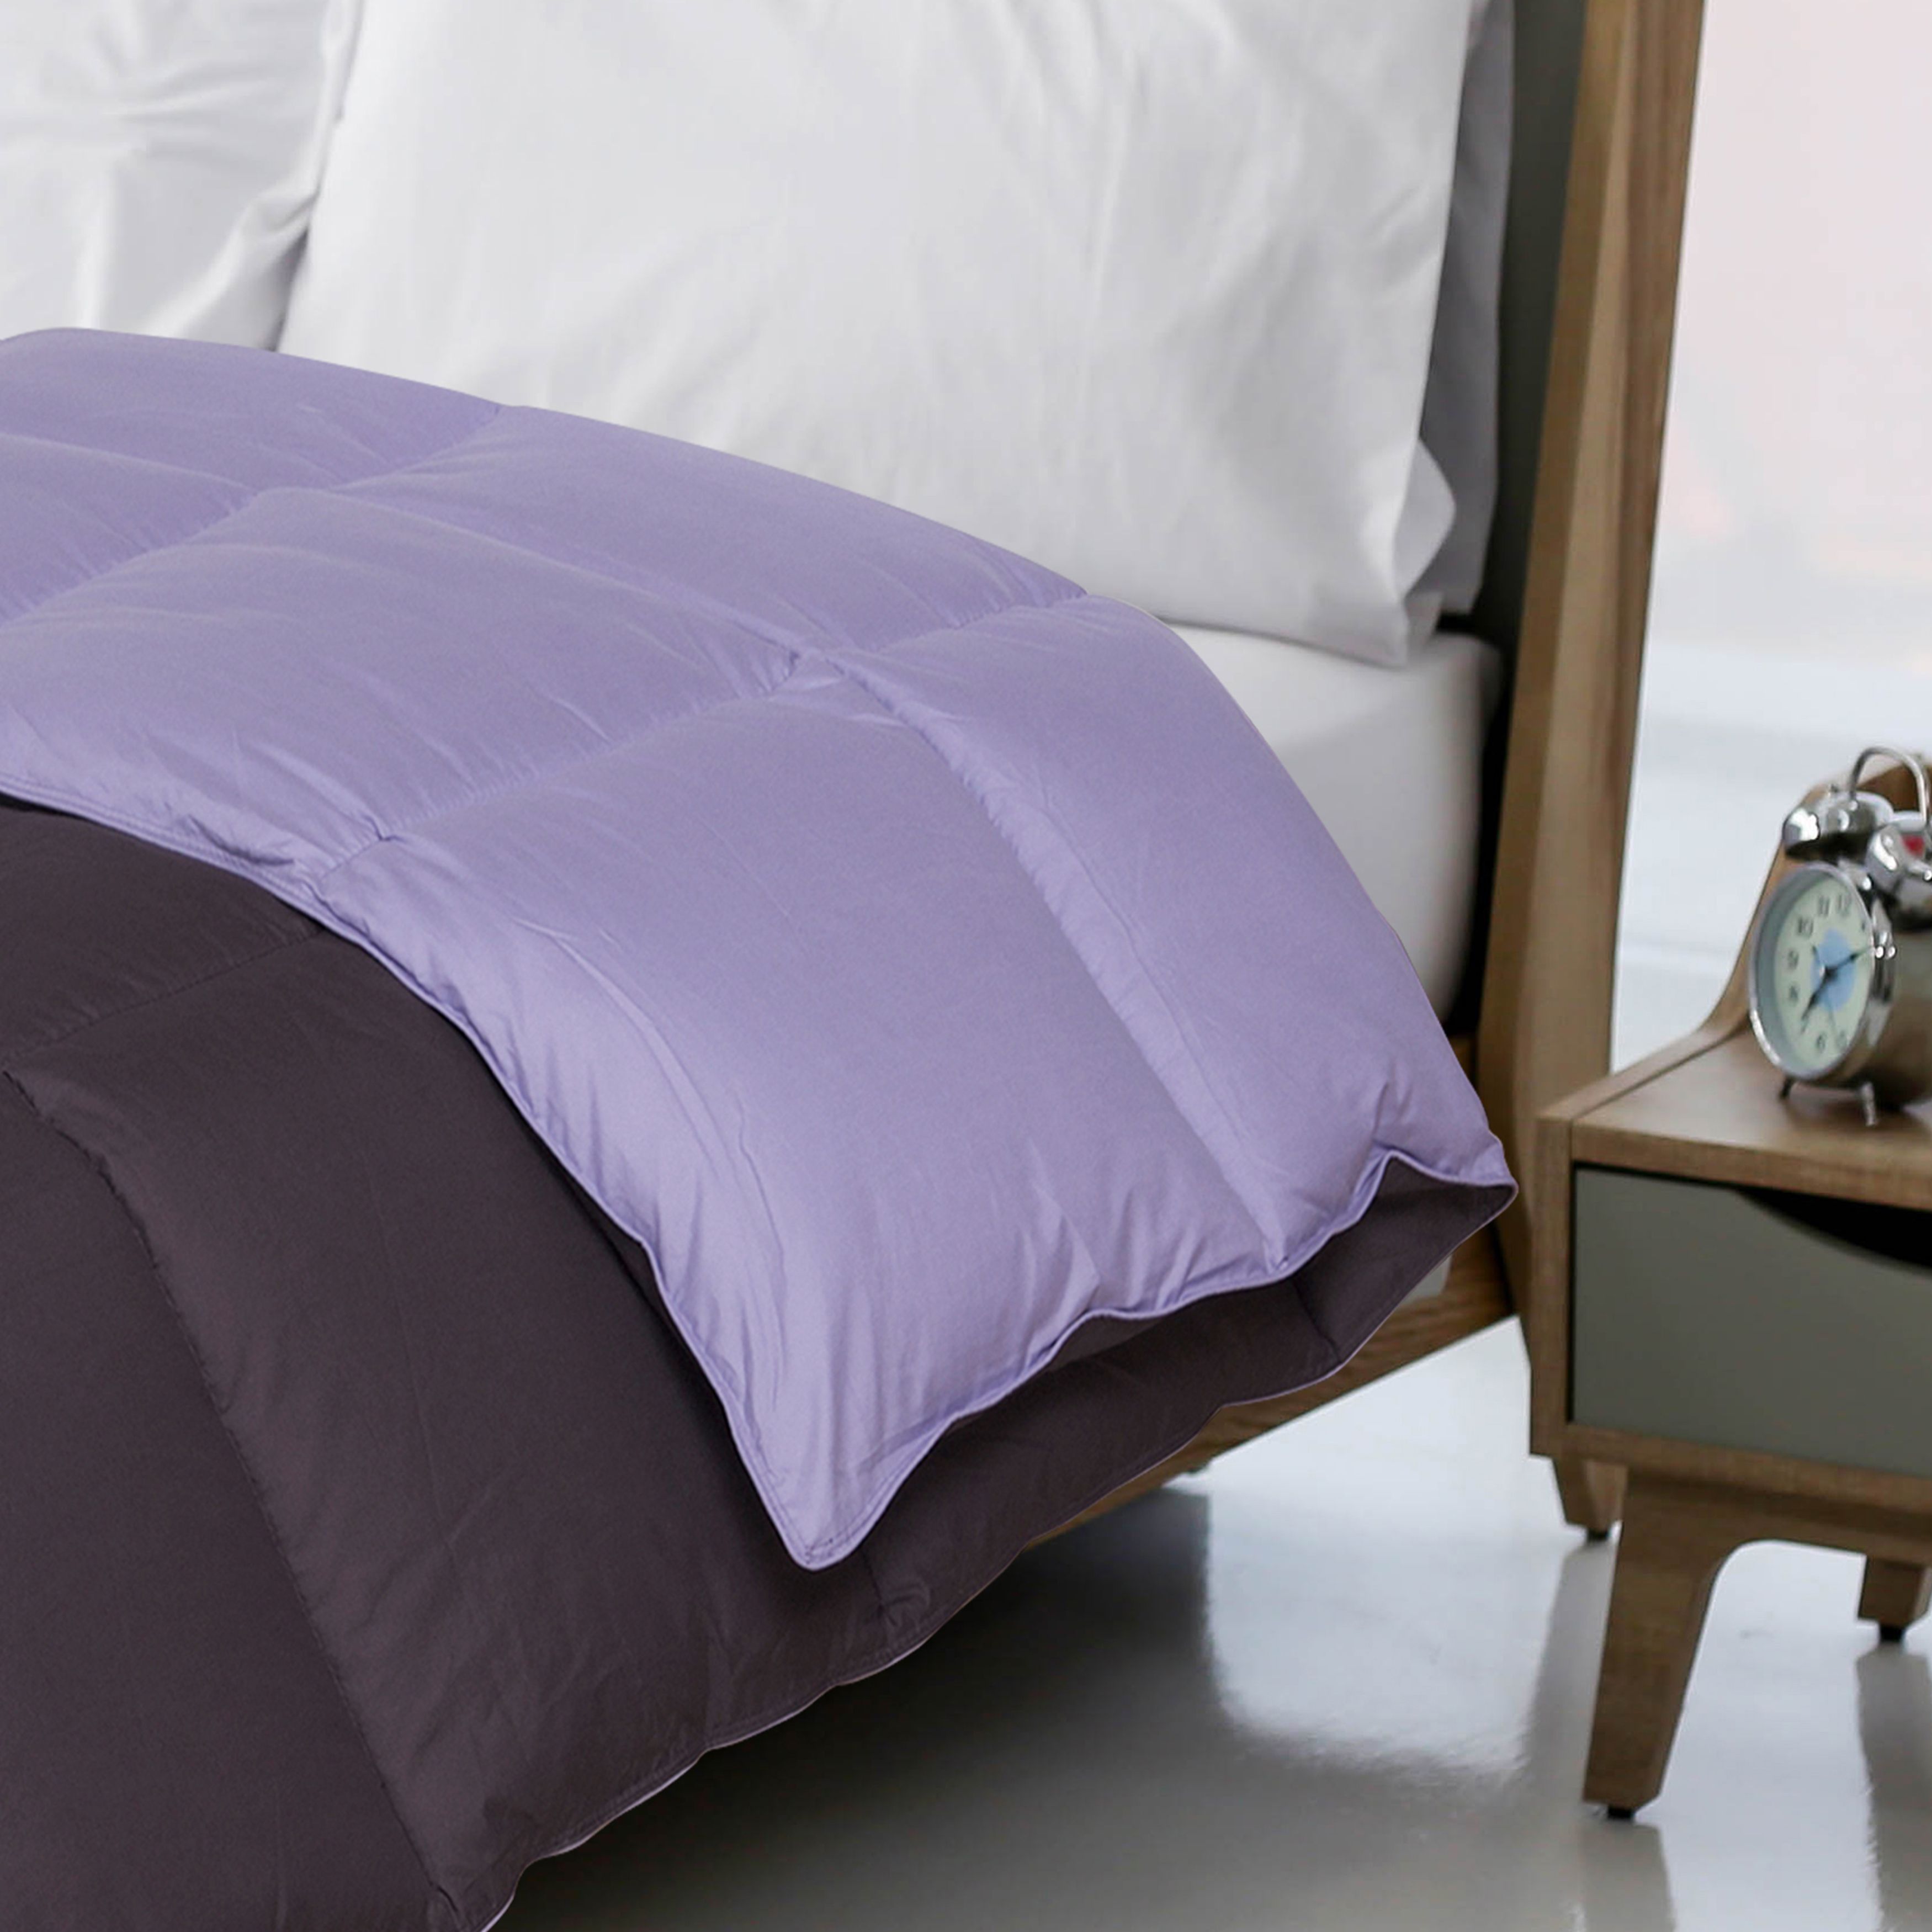 Superior Down Alternative Reversible Comforter, Full/ Queen, Plum/ Lilac - image 3 of 3